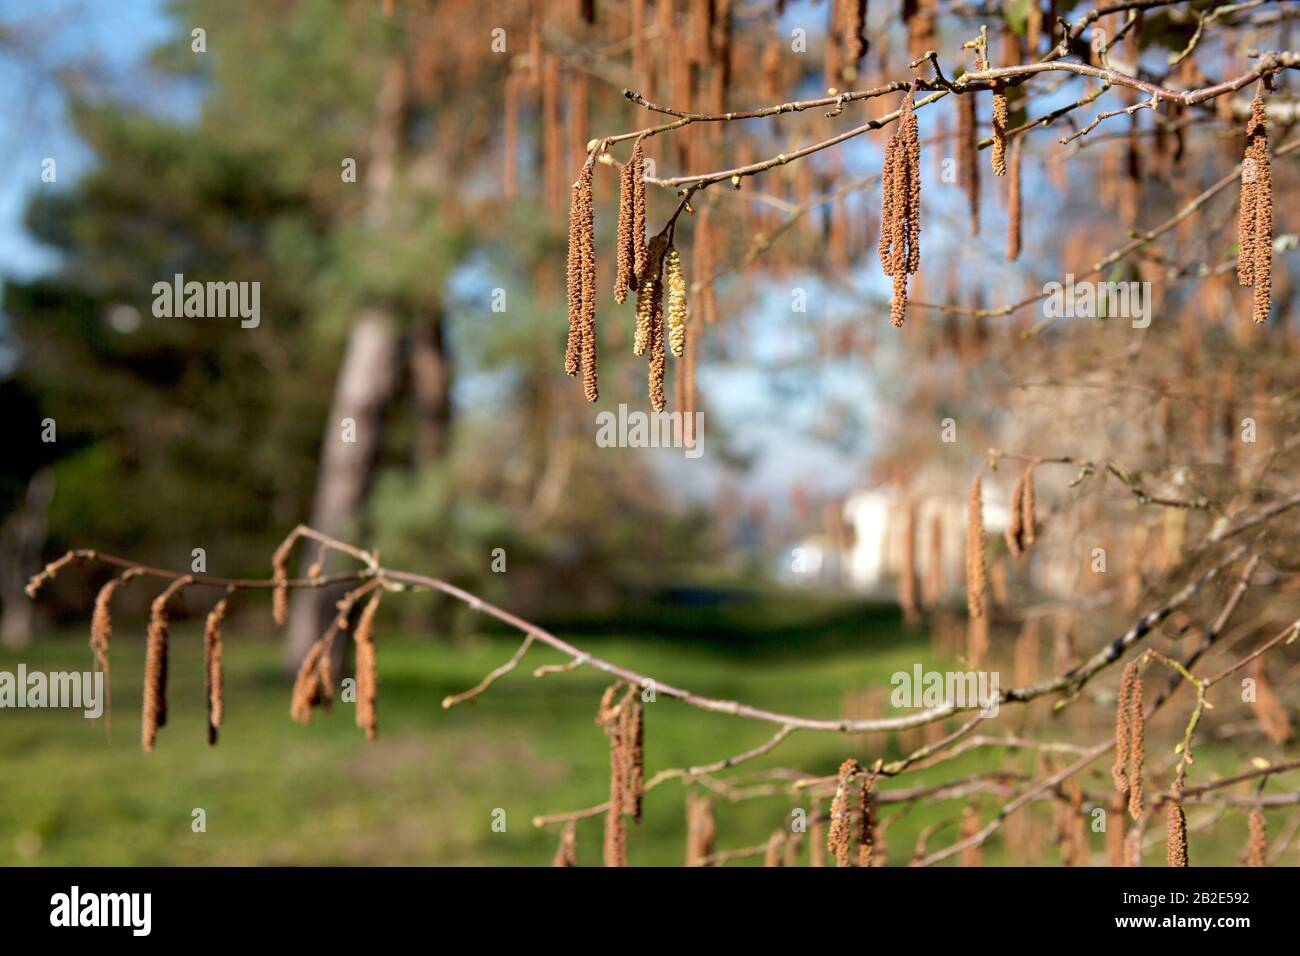 Las catenetas cuelgan de un árbol de avellana (género Corylus, también conocido como avellana, filbert o cobnut), febrero, Inglaterra, Reino Unido Foto de stock